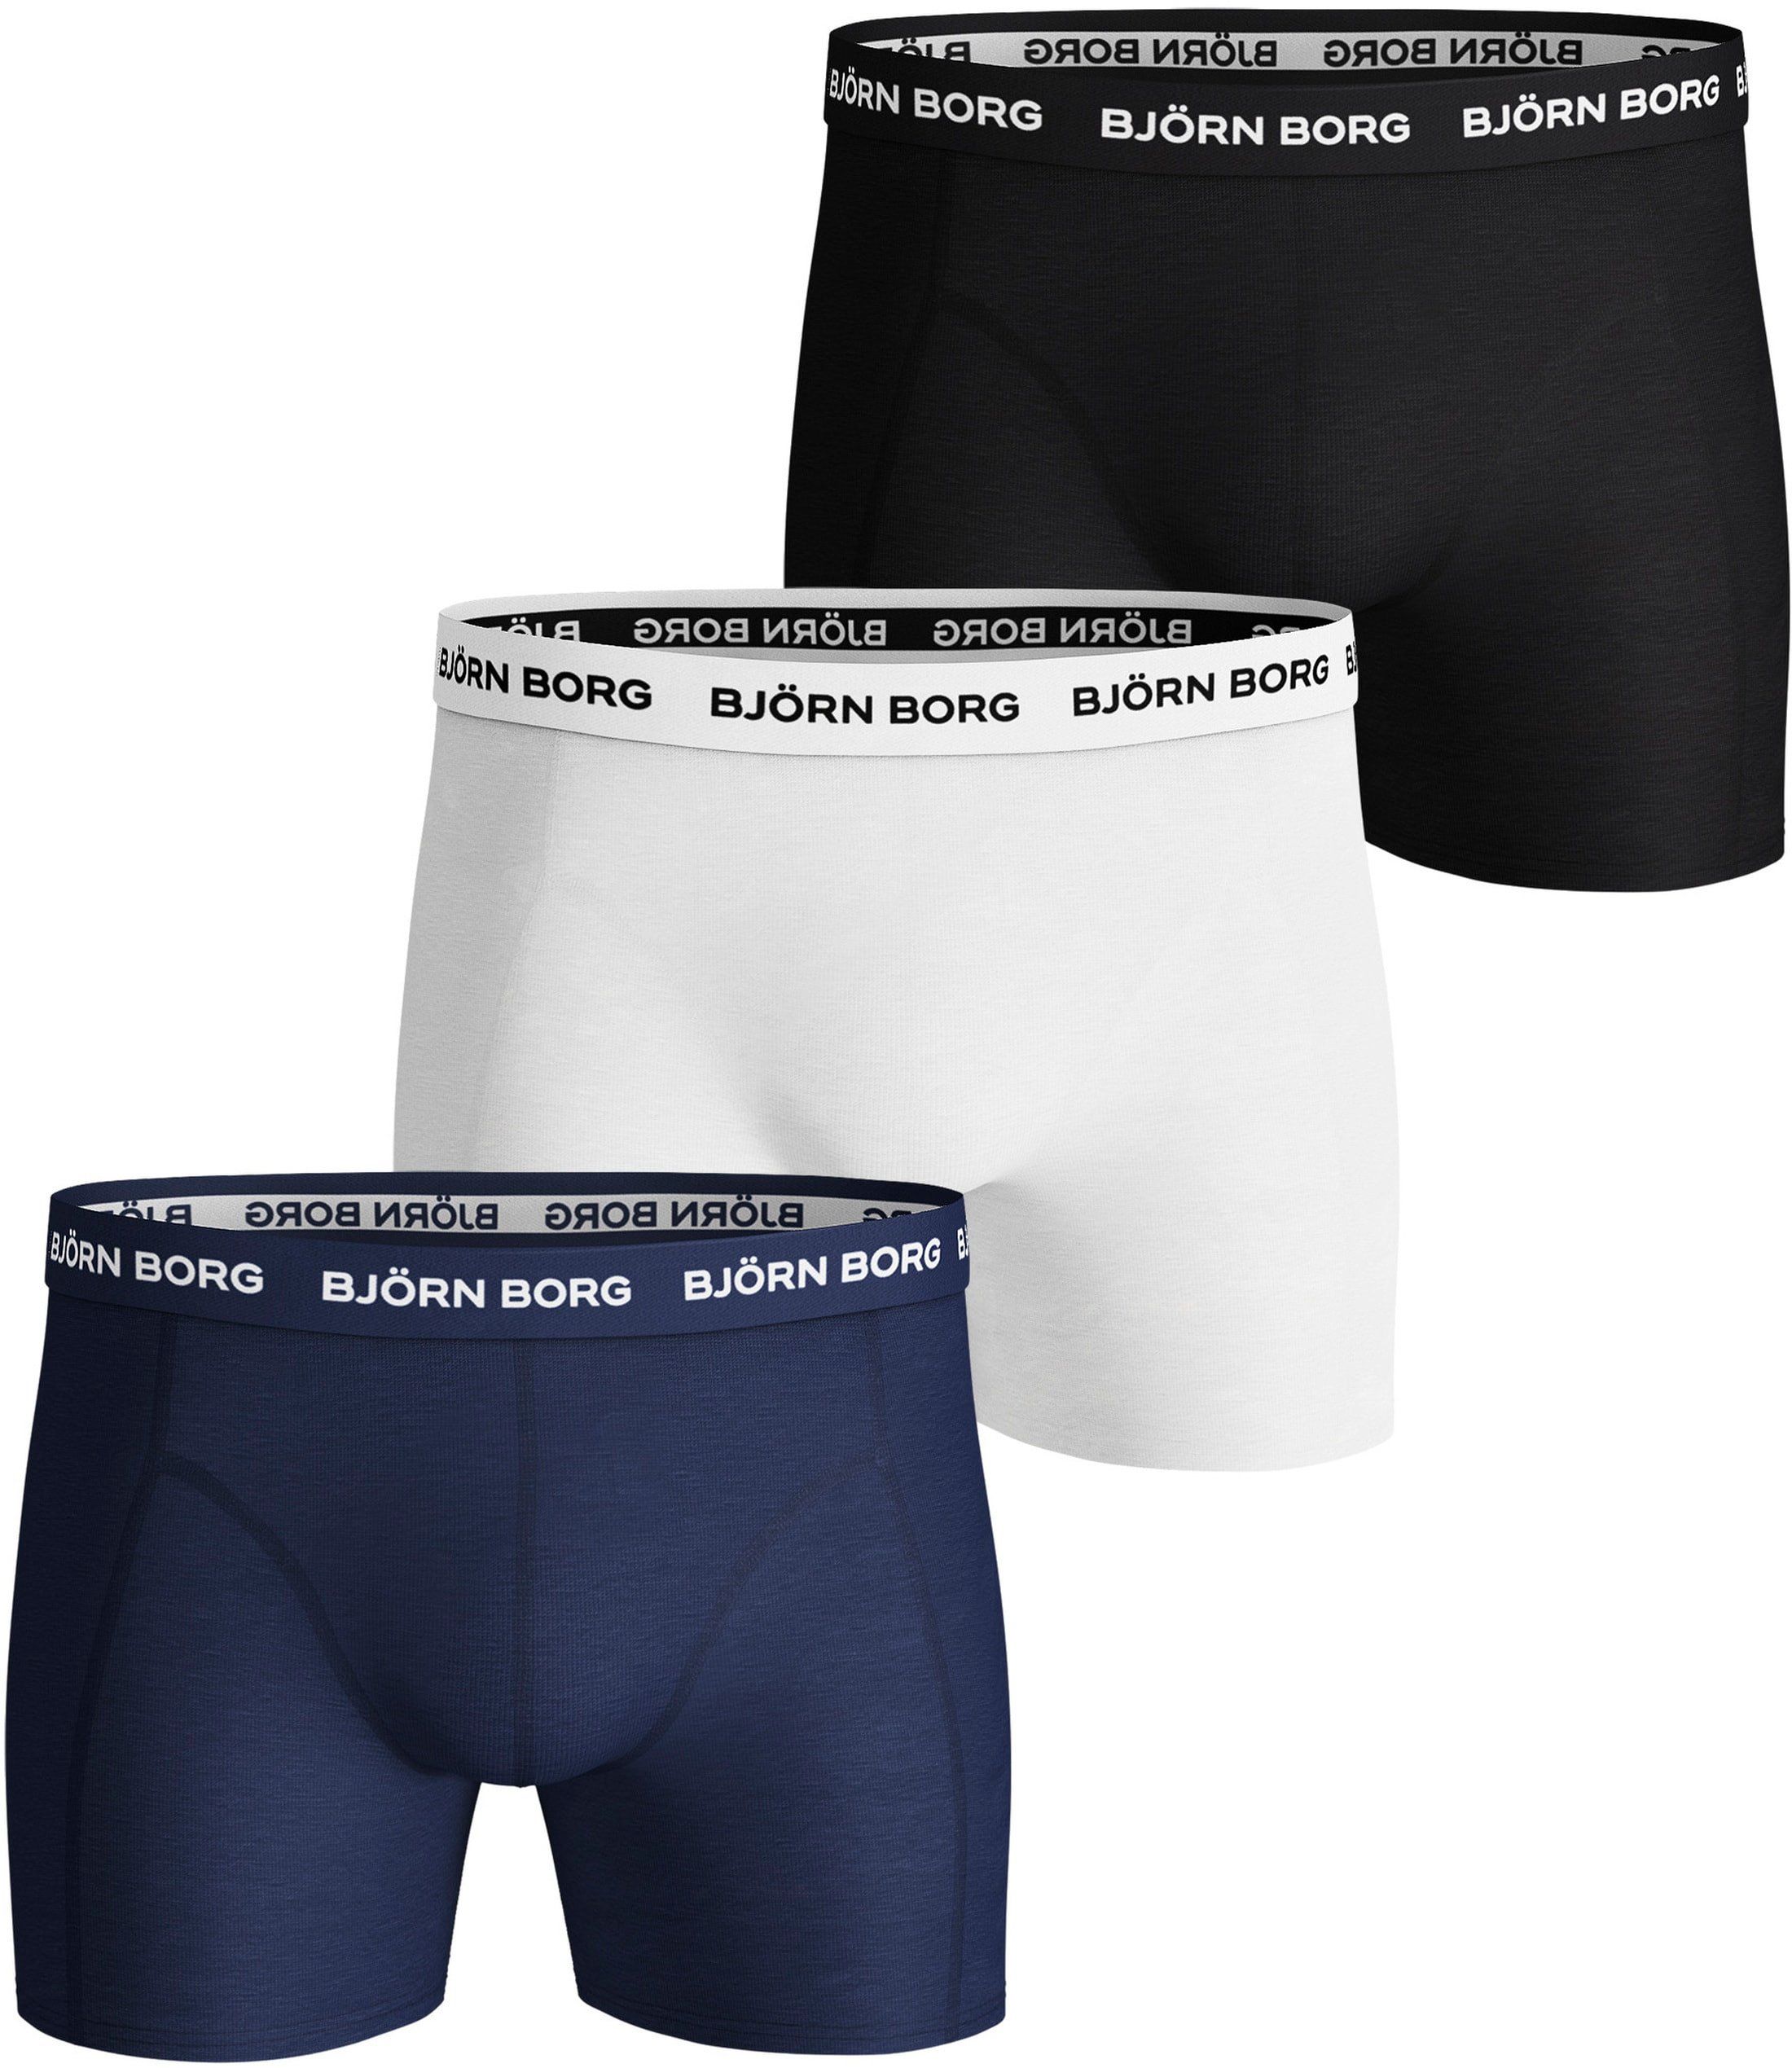 Bjorn Borg Boxer Shorts Solids 3-Pack Dark Blue White Black Blue size S